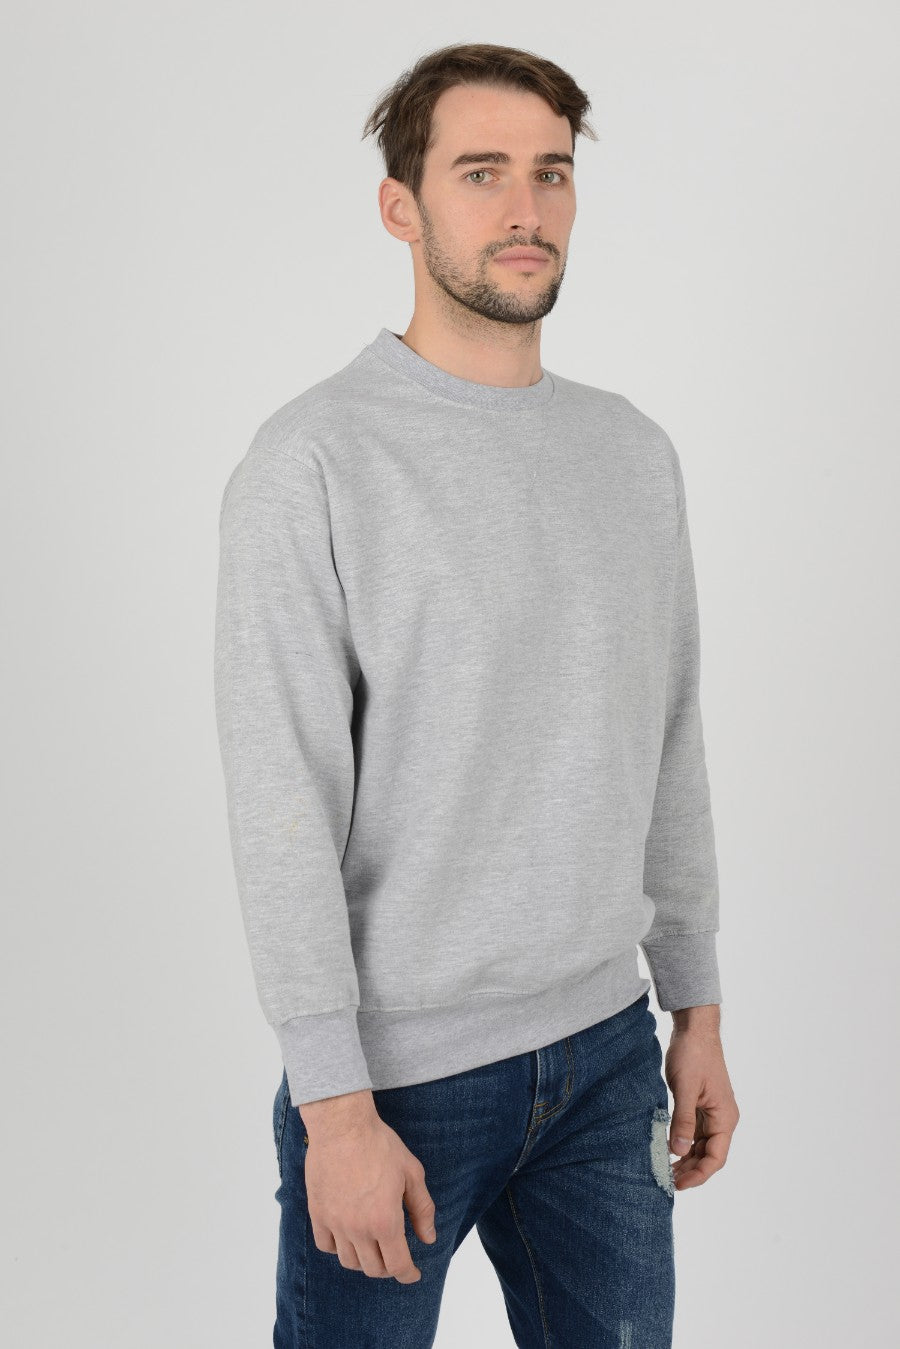 Mens-Plain-Fleece-Sweatshirt-Jumper-Light-Grey